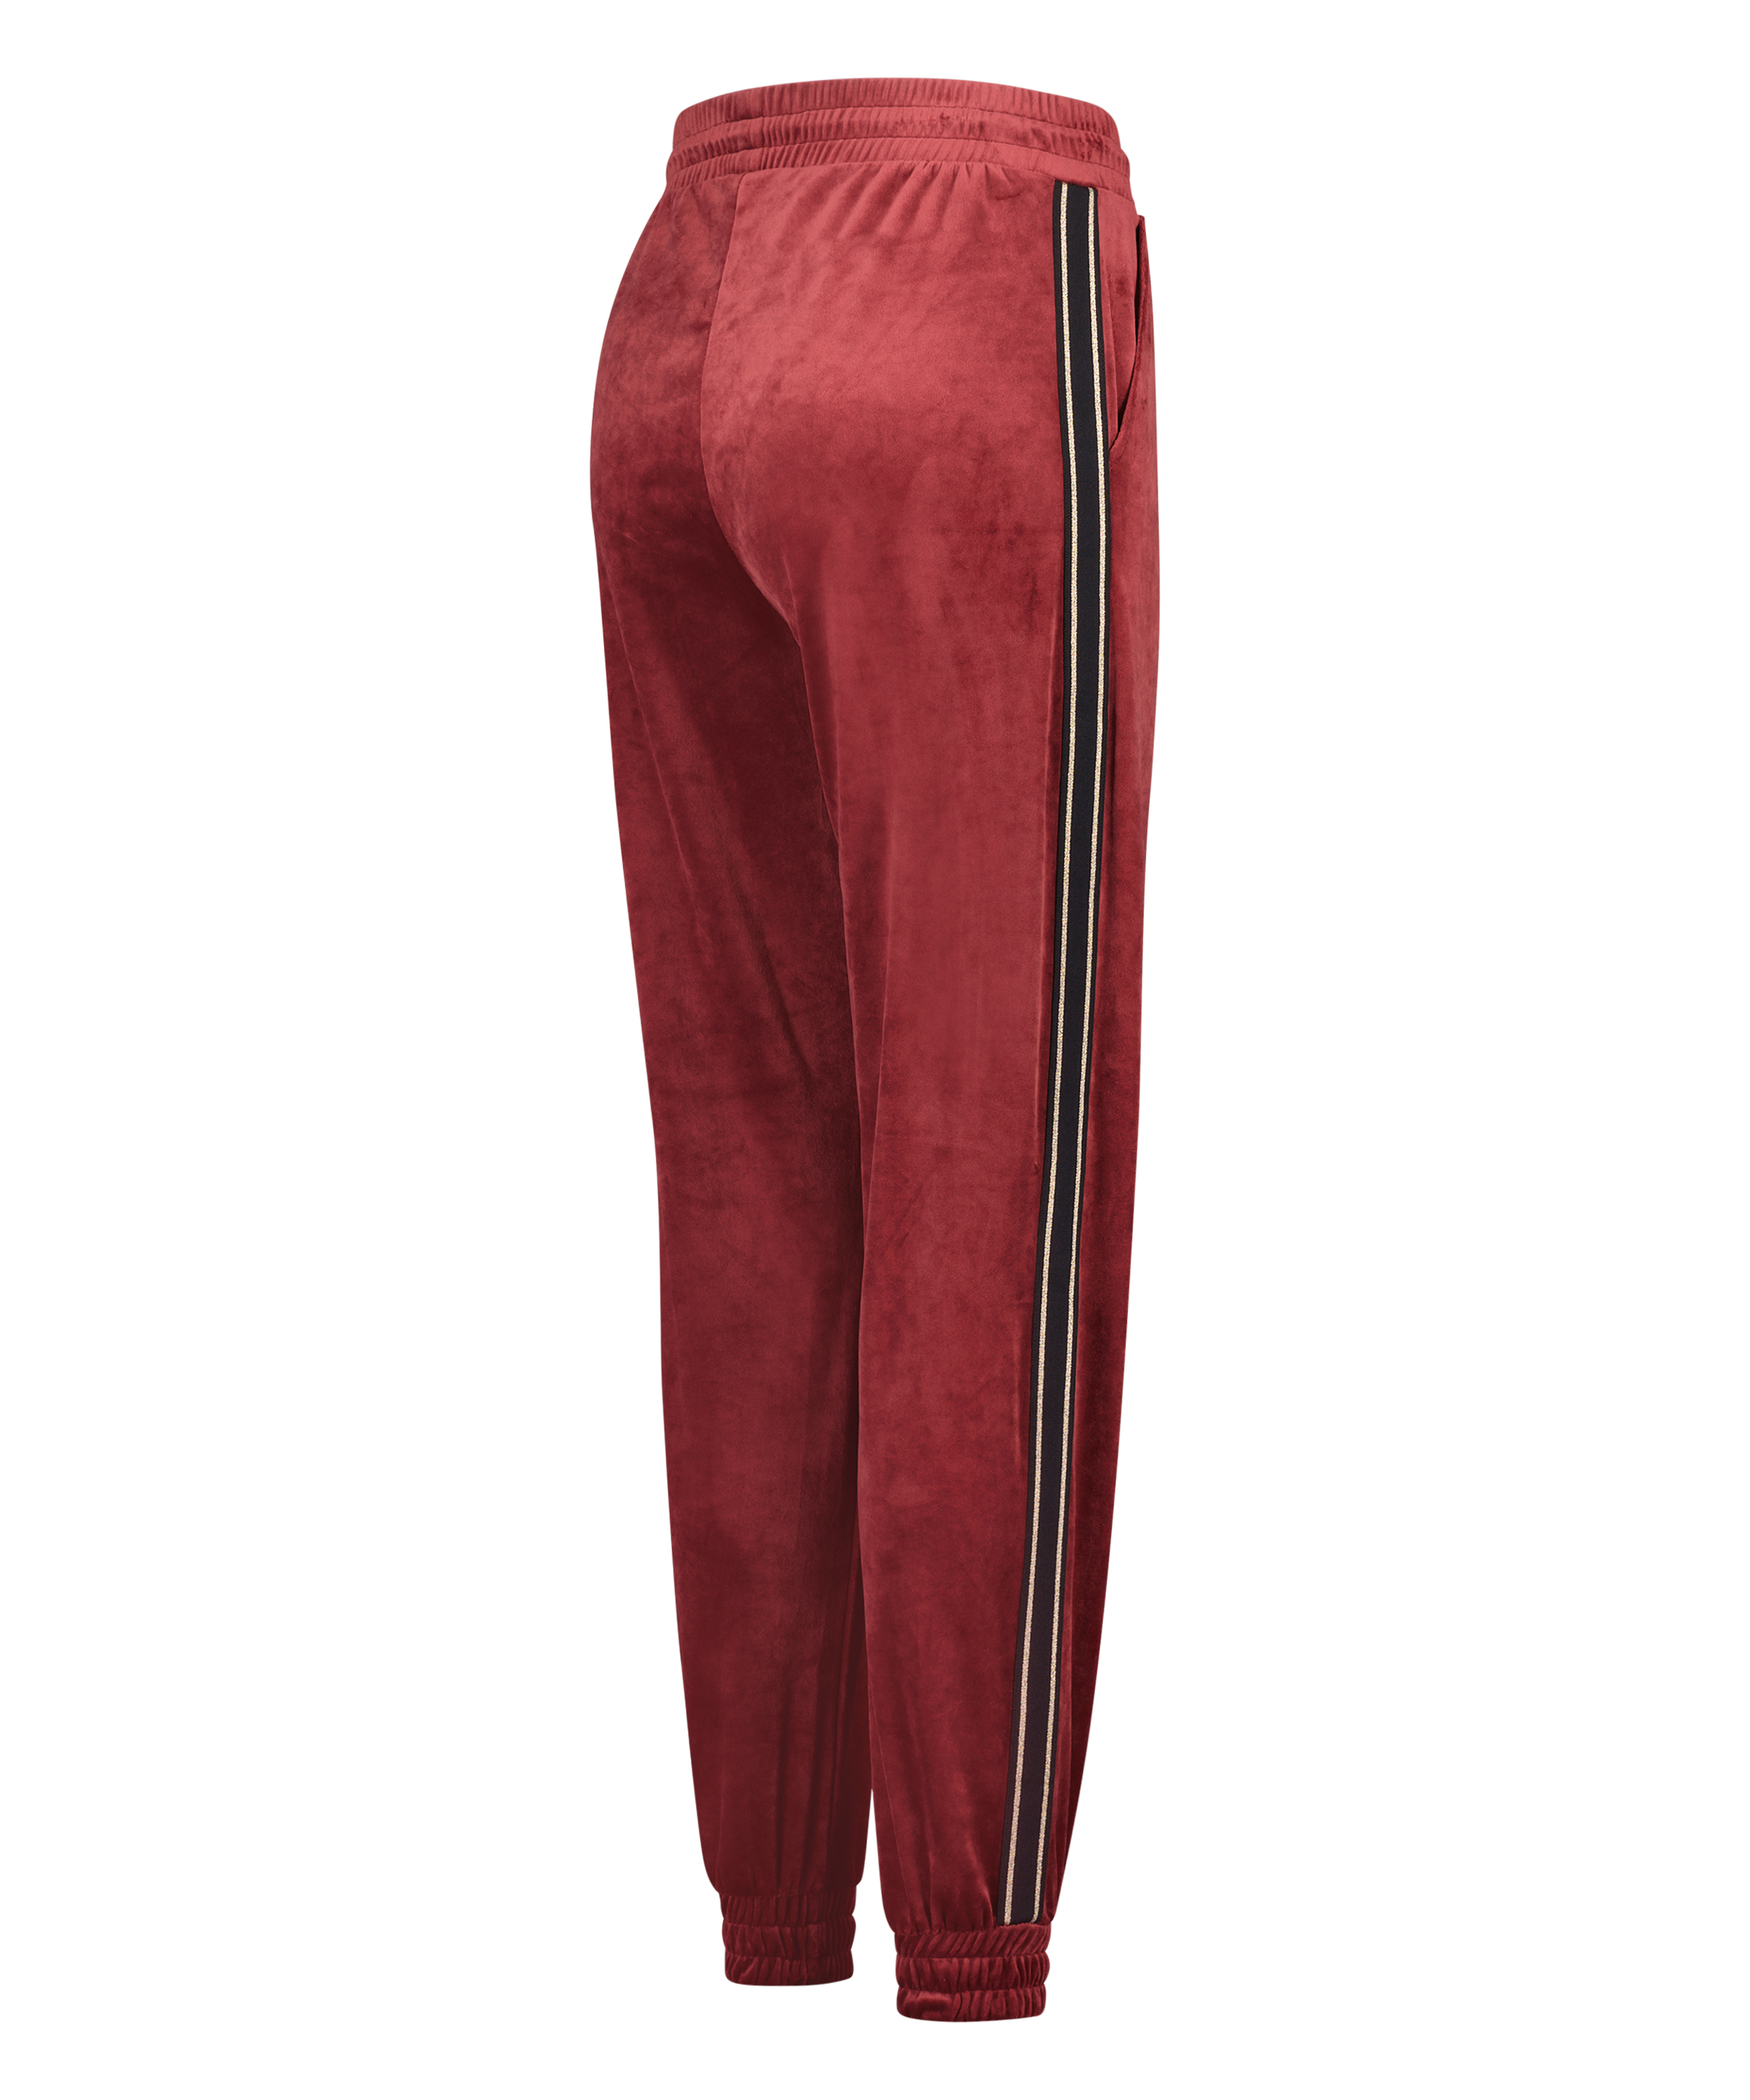 Pantalon de sport Velours HKMX, Rouge, main